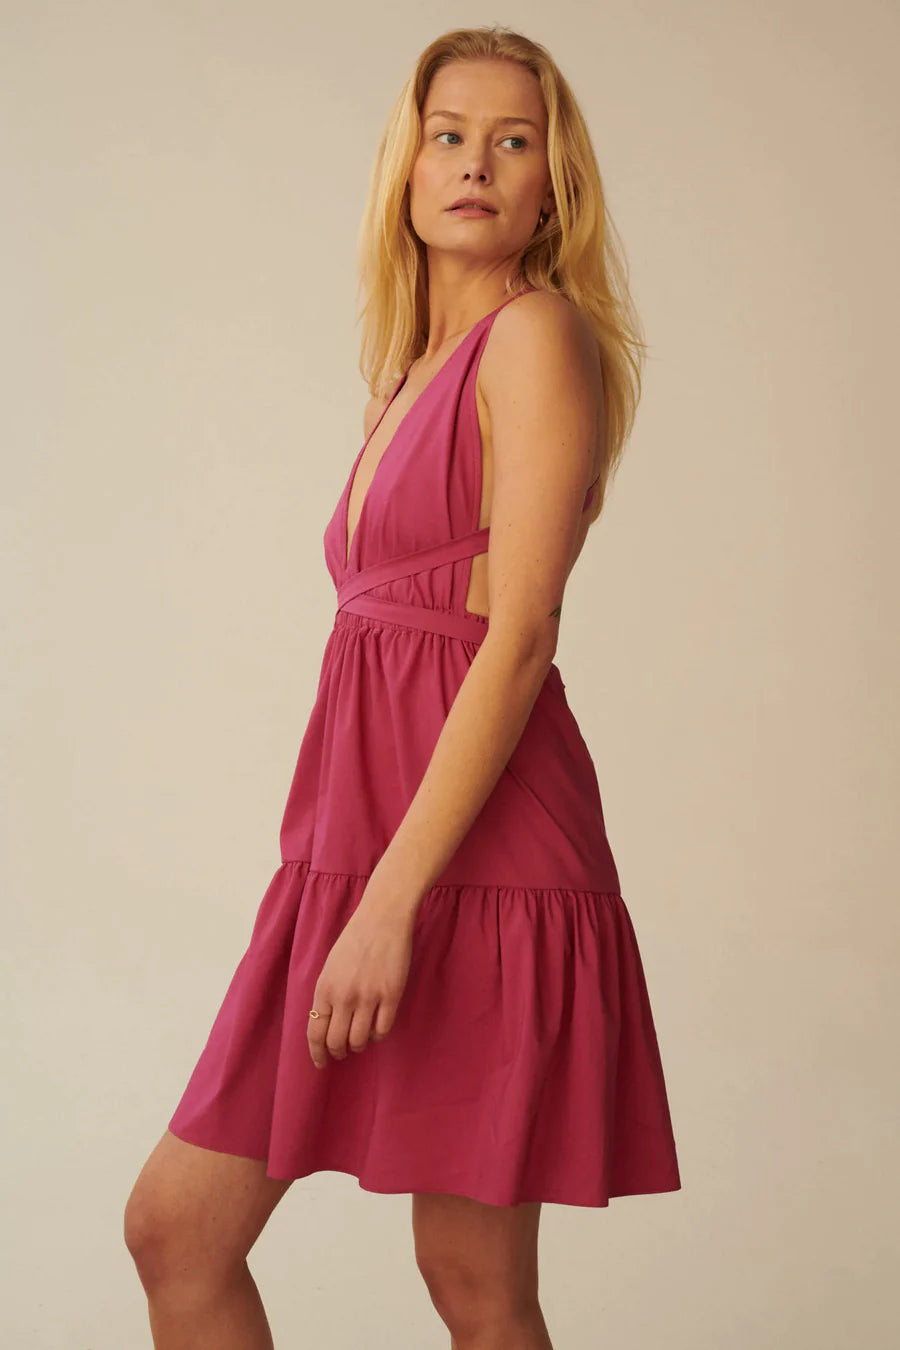 Les Goodies - Capri Pink Dress